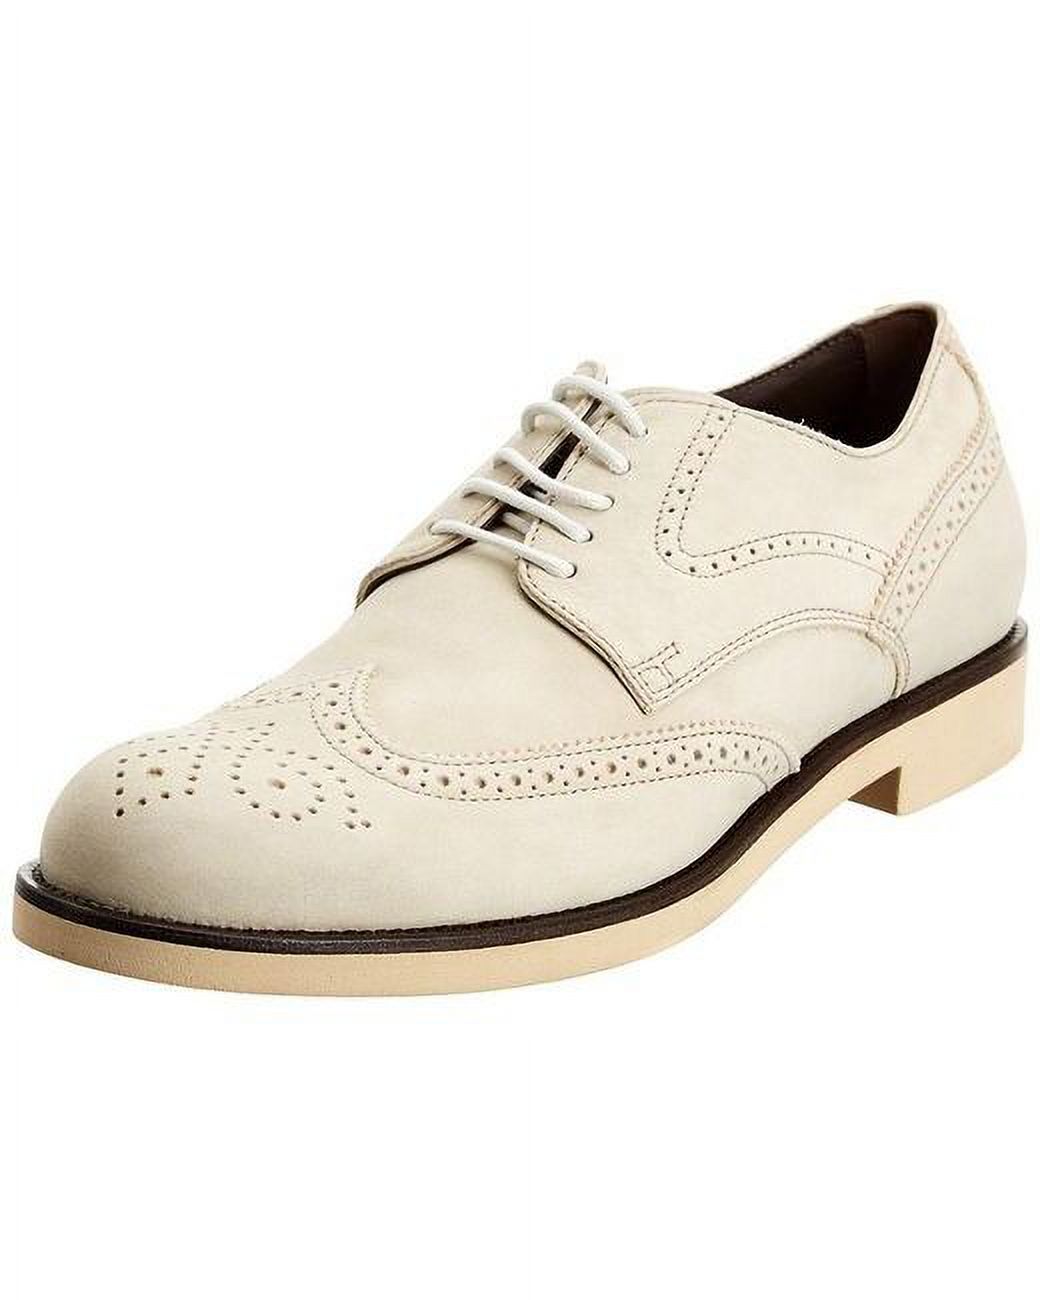 Tod's Men's Allacciato Natural Off White Suede Shoes Wingtip Lace Up Shoes (ARGILLA, 11.5 UK / 12.5 US) - image 1 of 3